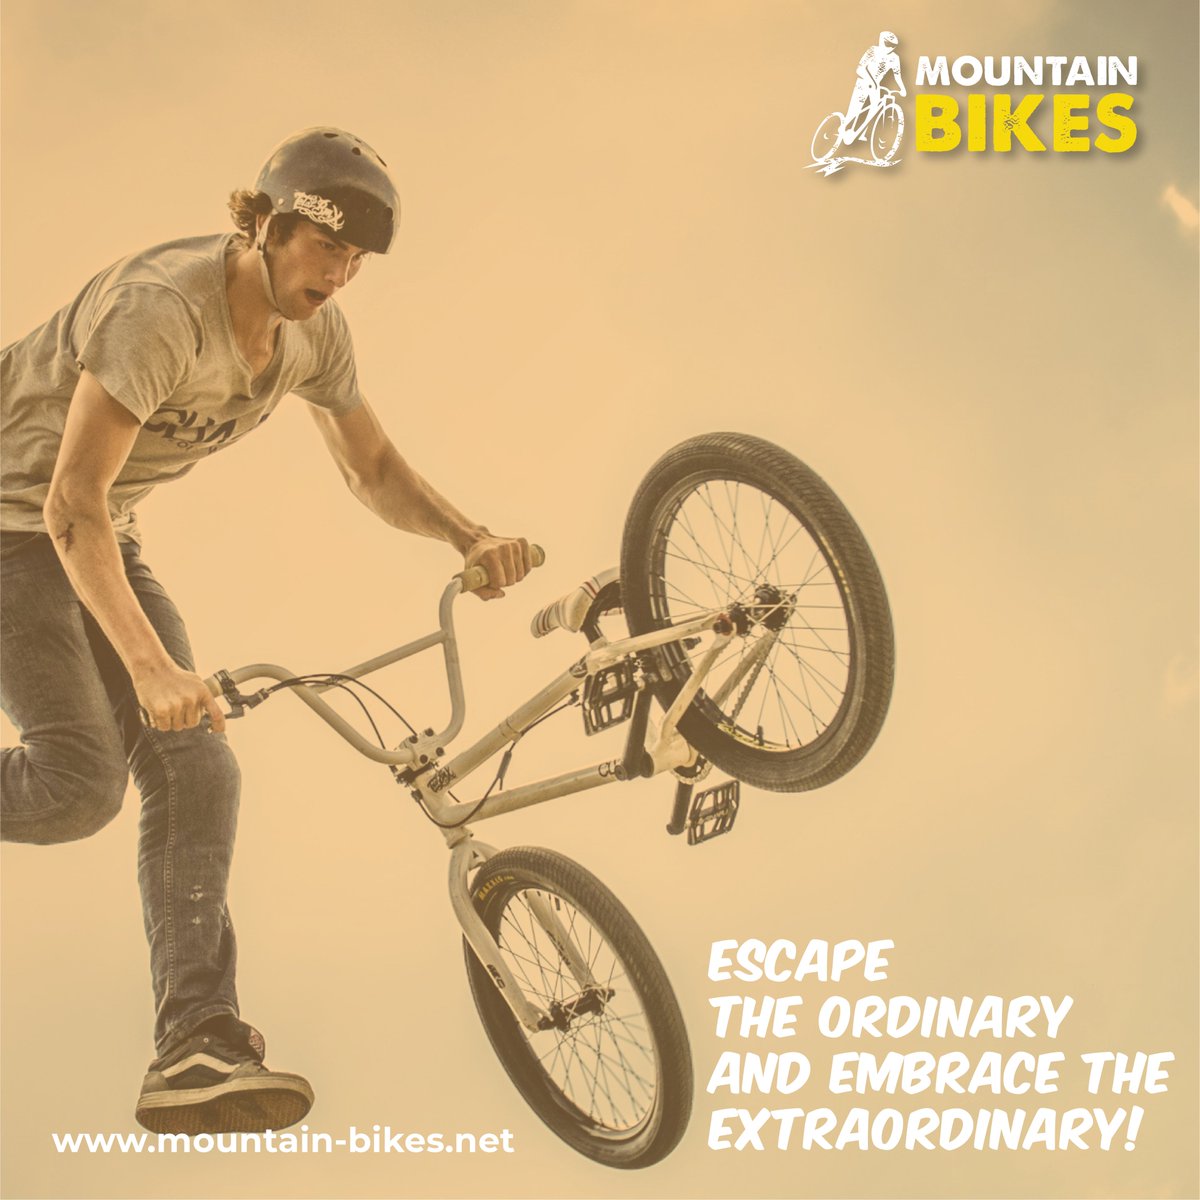 Escape the ordinary and embrace the extraordinary! 
#mountainbiking #mtb #bikelife #cyclinglife #mtblifestyle #ridemoremtb #mountainbiketrail #bikeadventures #singletrack #downhillmtb